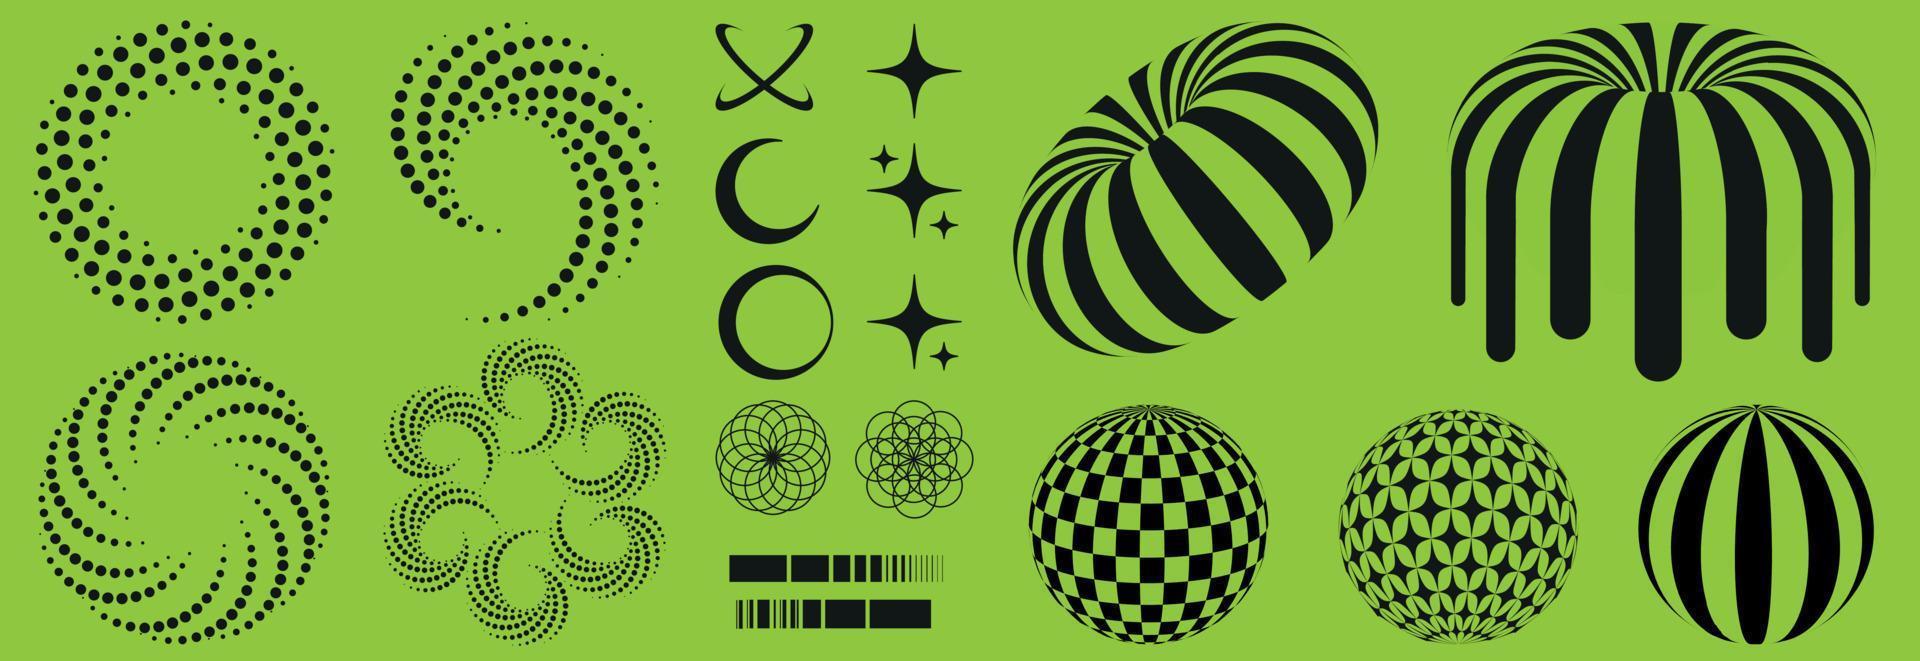 ácido psicodélico retro conjunto dentro na moda anos 90 estilo. surreal geométrico formas círculos, rosquinhas, estrelas, bolas, terra, zebra. vetor